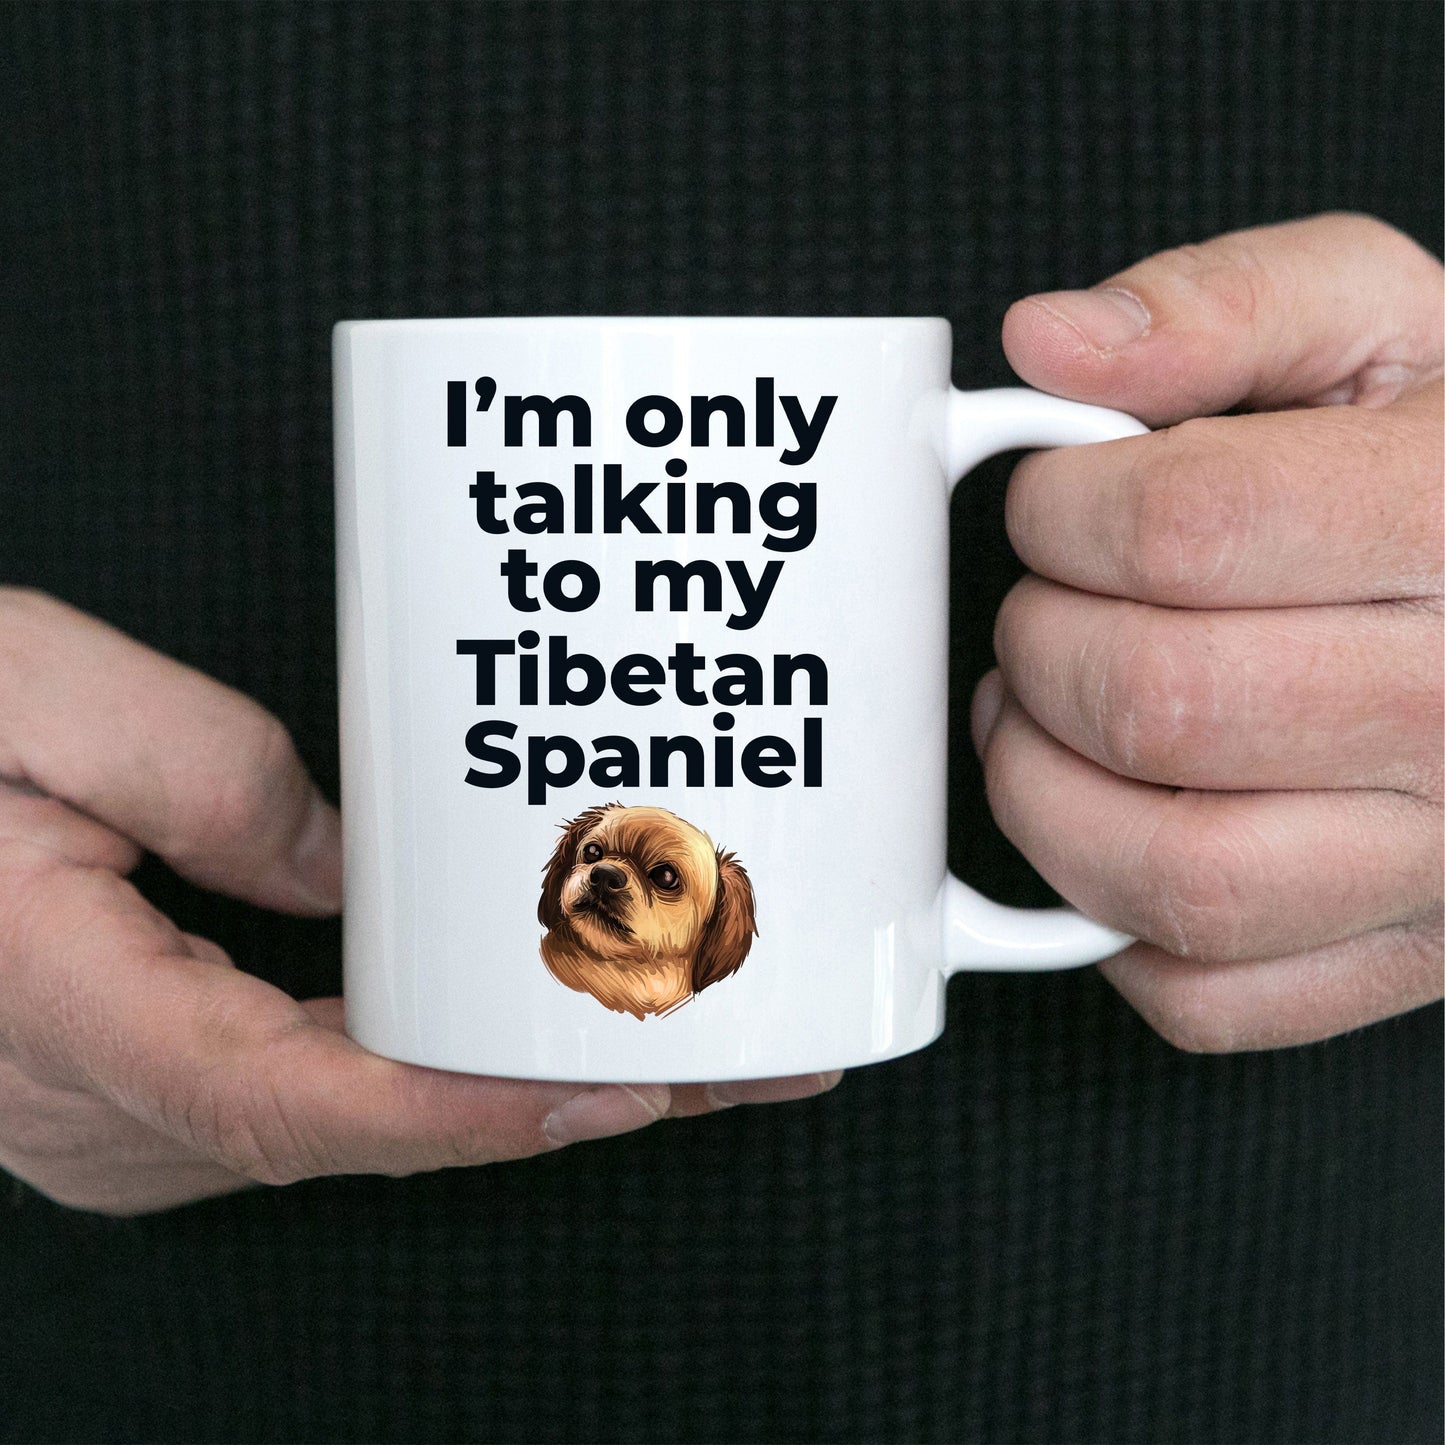 Tibetan Spaniel Dog Funny Coffee Mug Custom Photo - I'm only talking to my Tibetan Spaniel